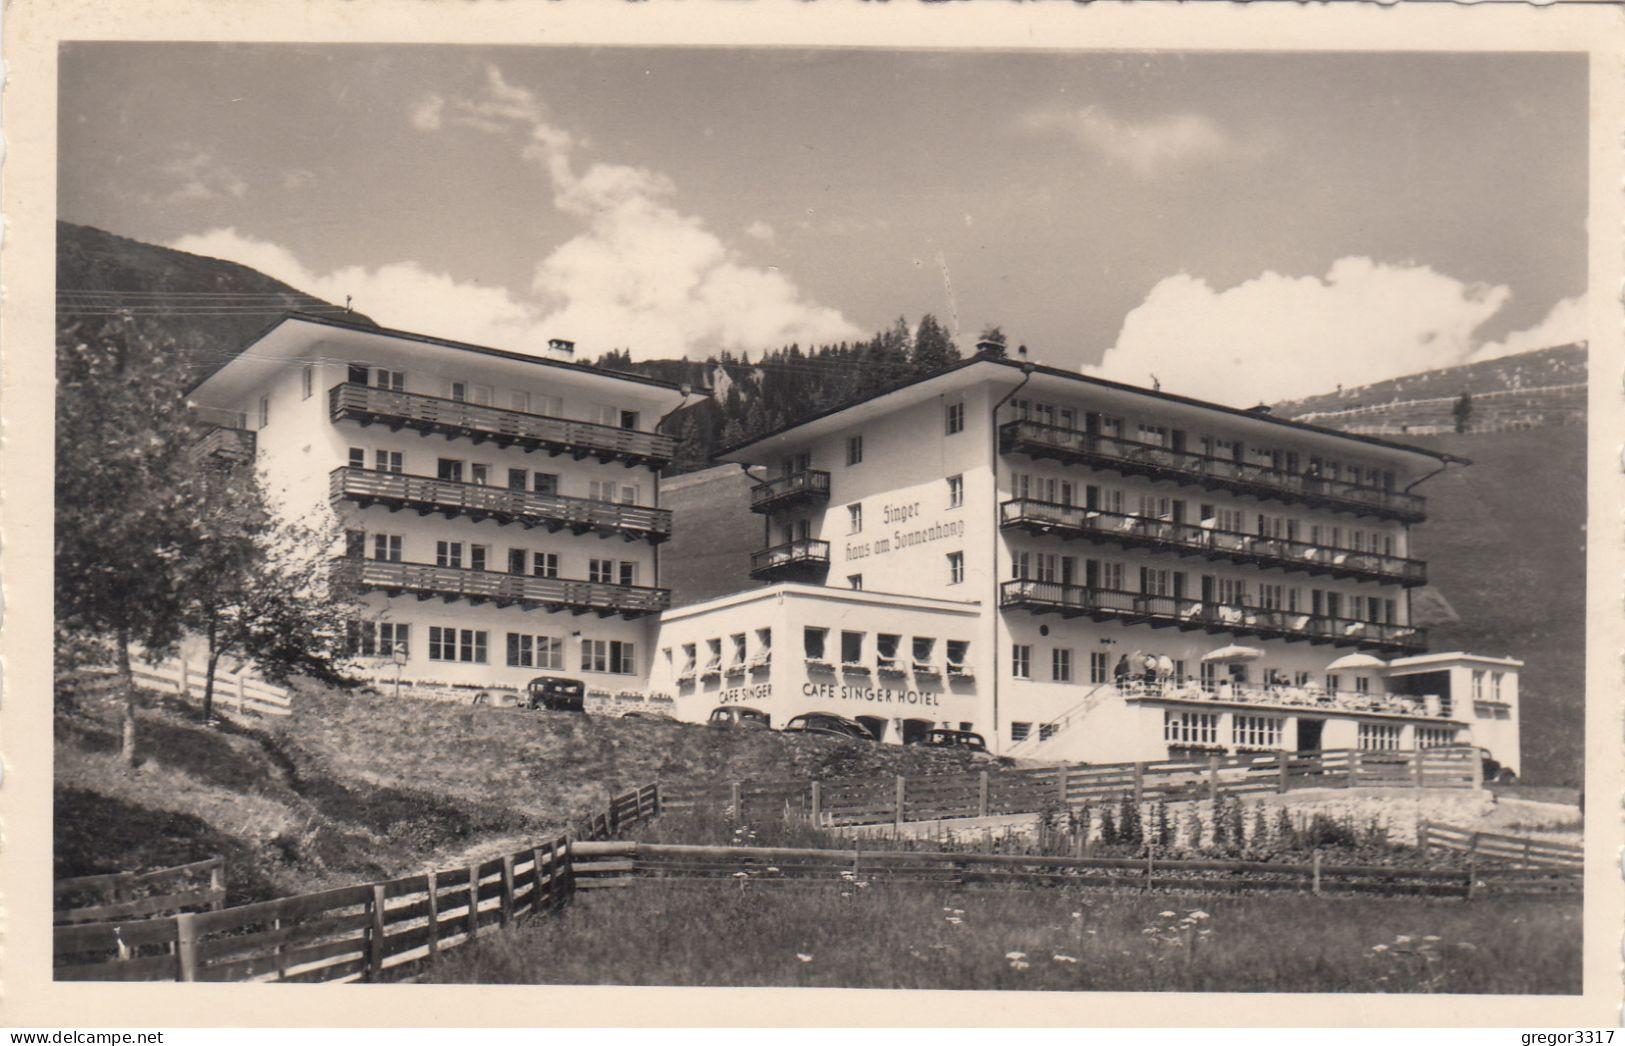 E1444) BERWANG In TIrol  - Hotel SINGER - Haus Am Sonnenhang - ALT - Berwang